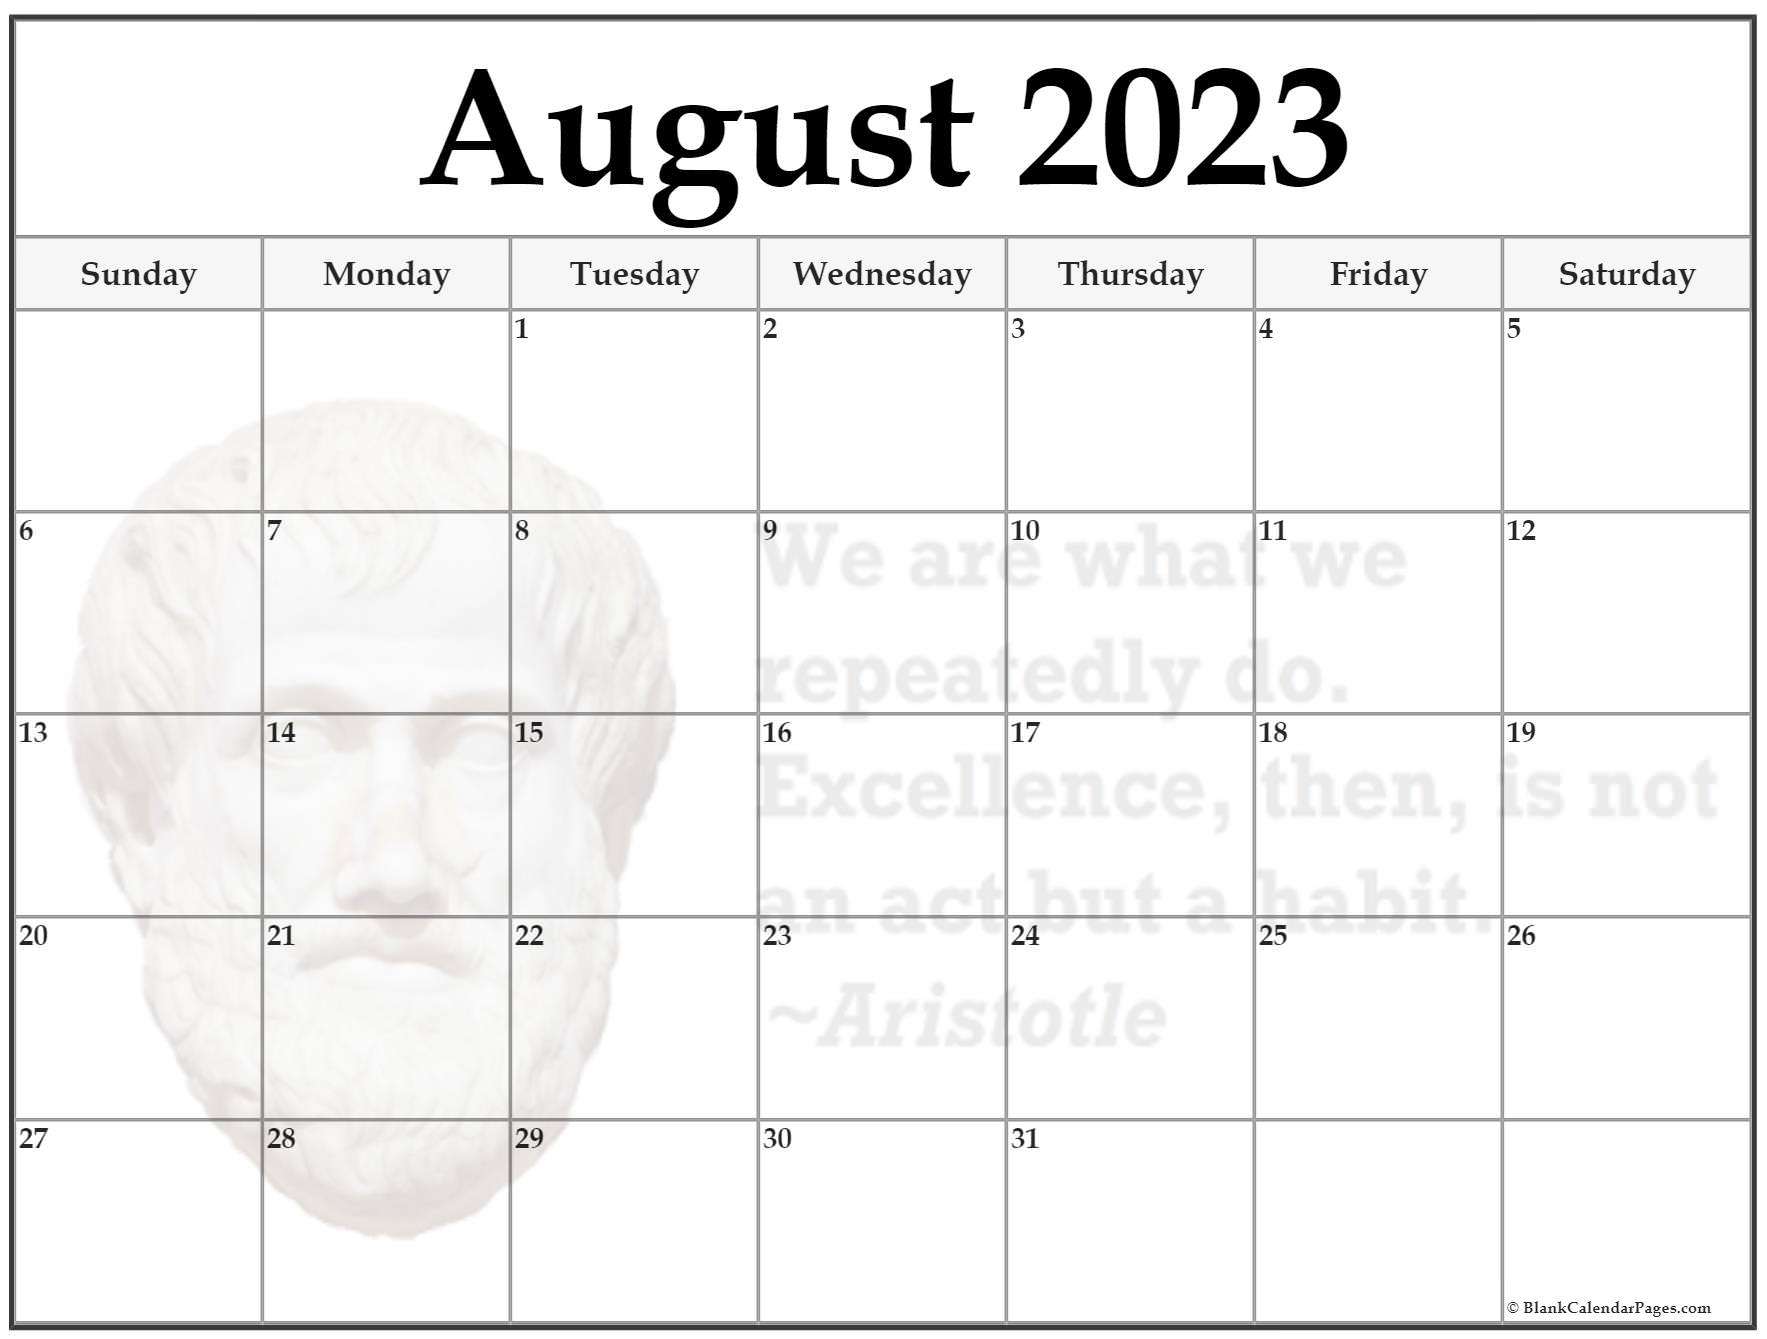 24-august-2023-quote-calendars